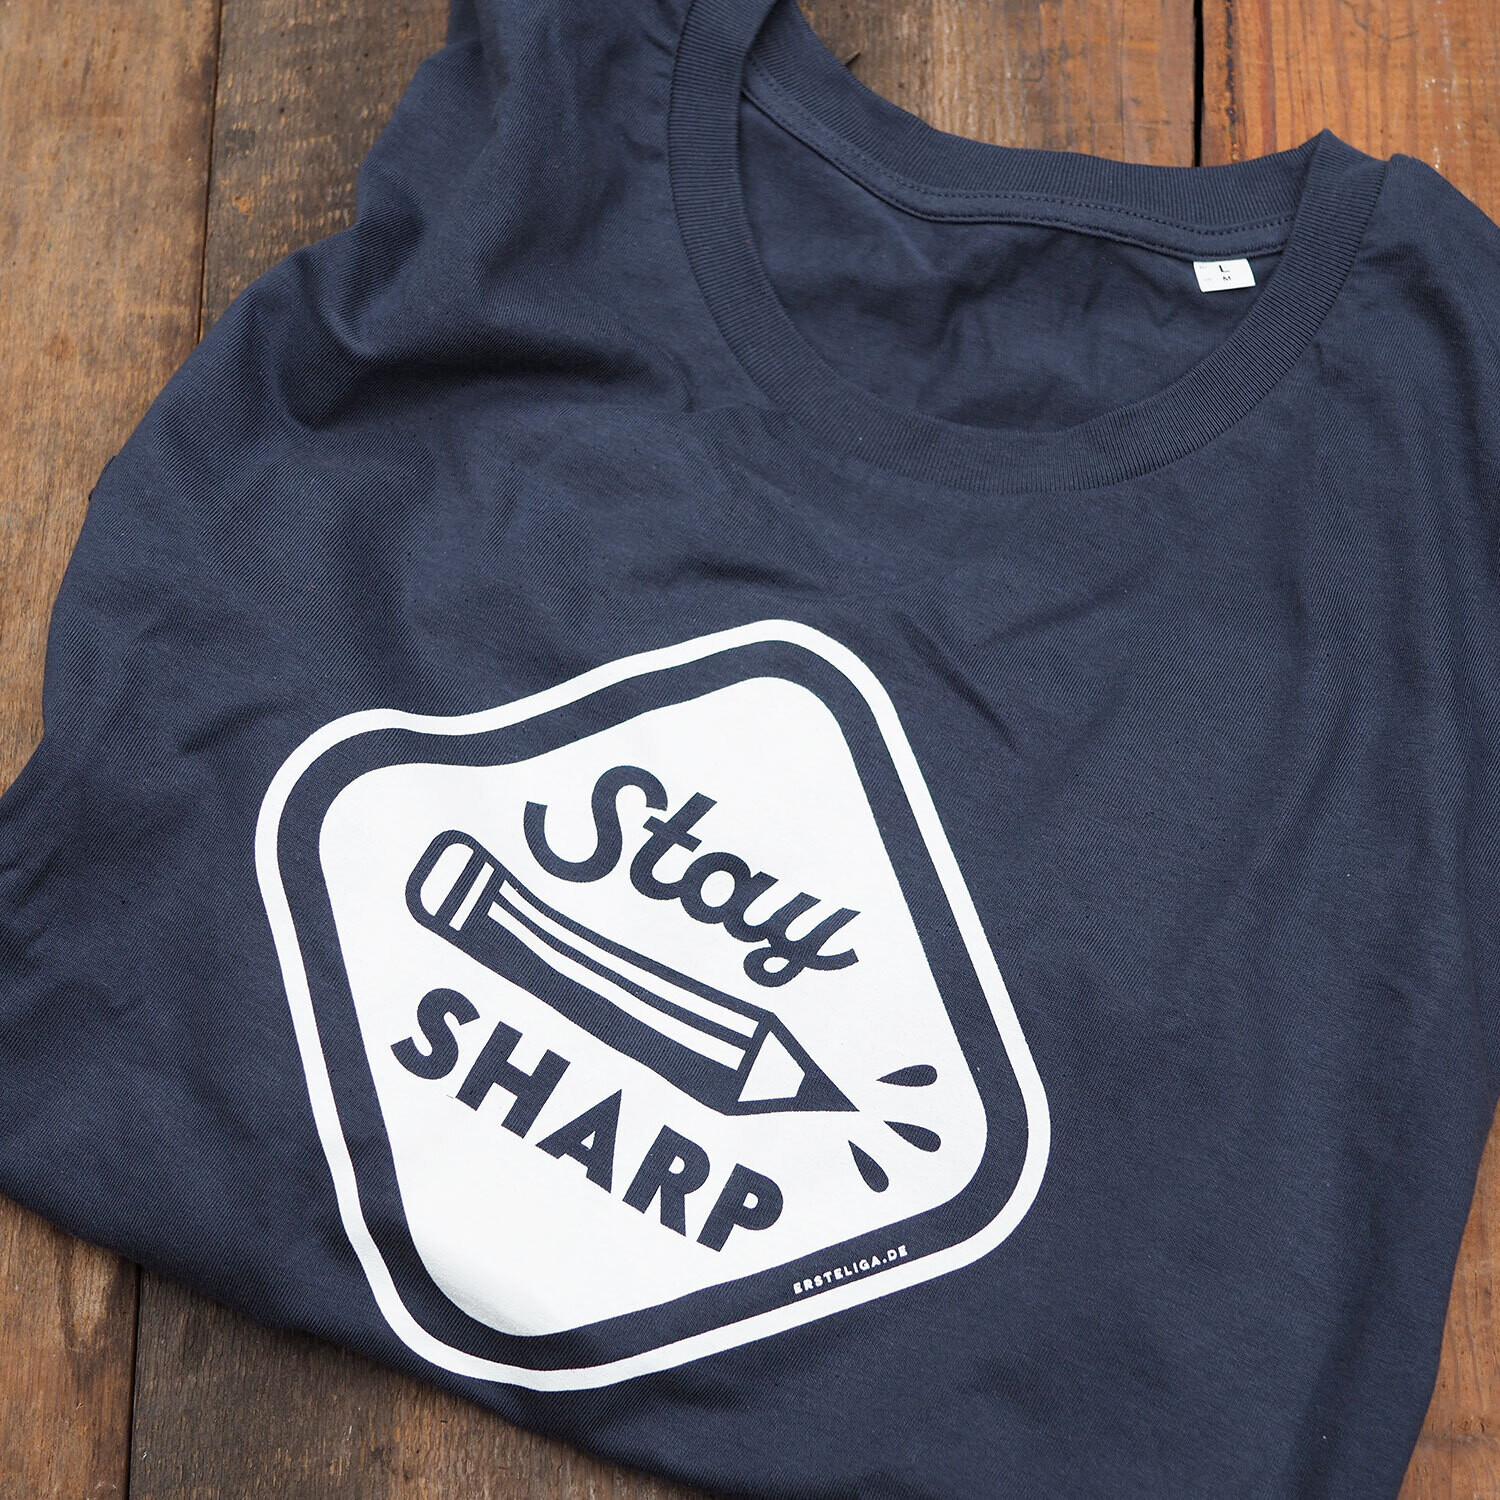 Stay Sharp Shirt